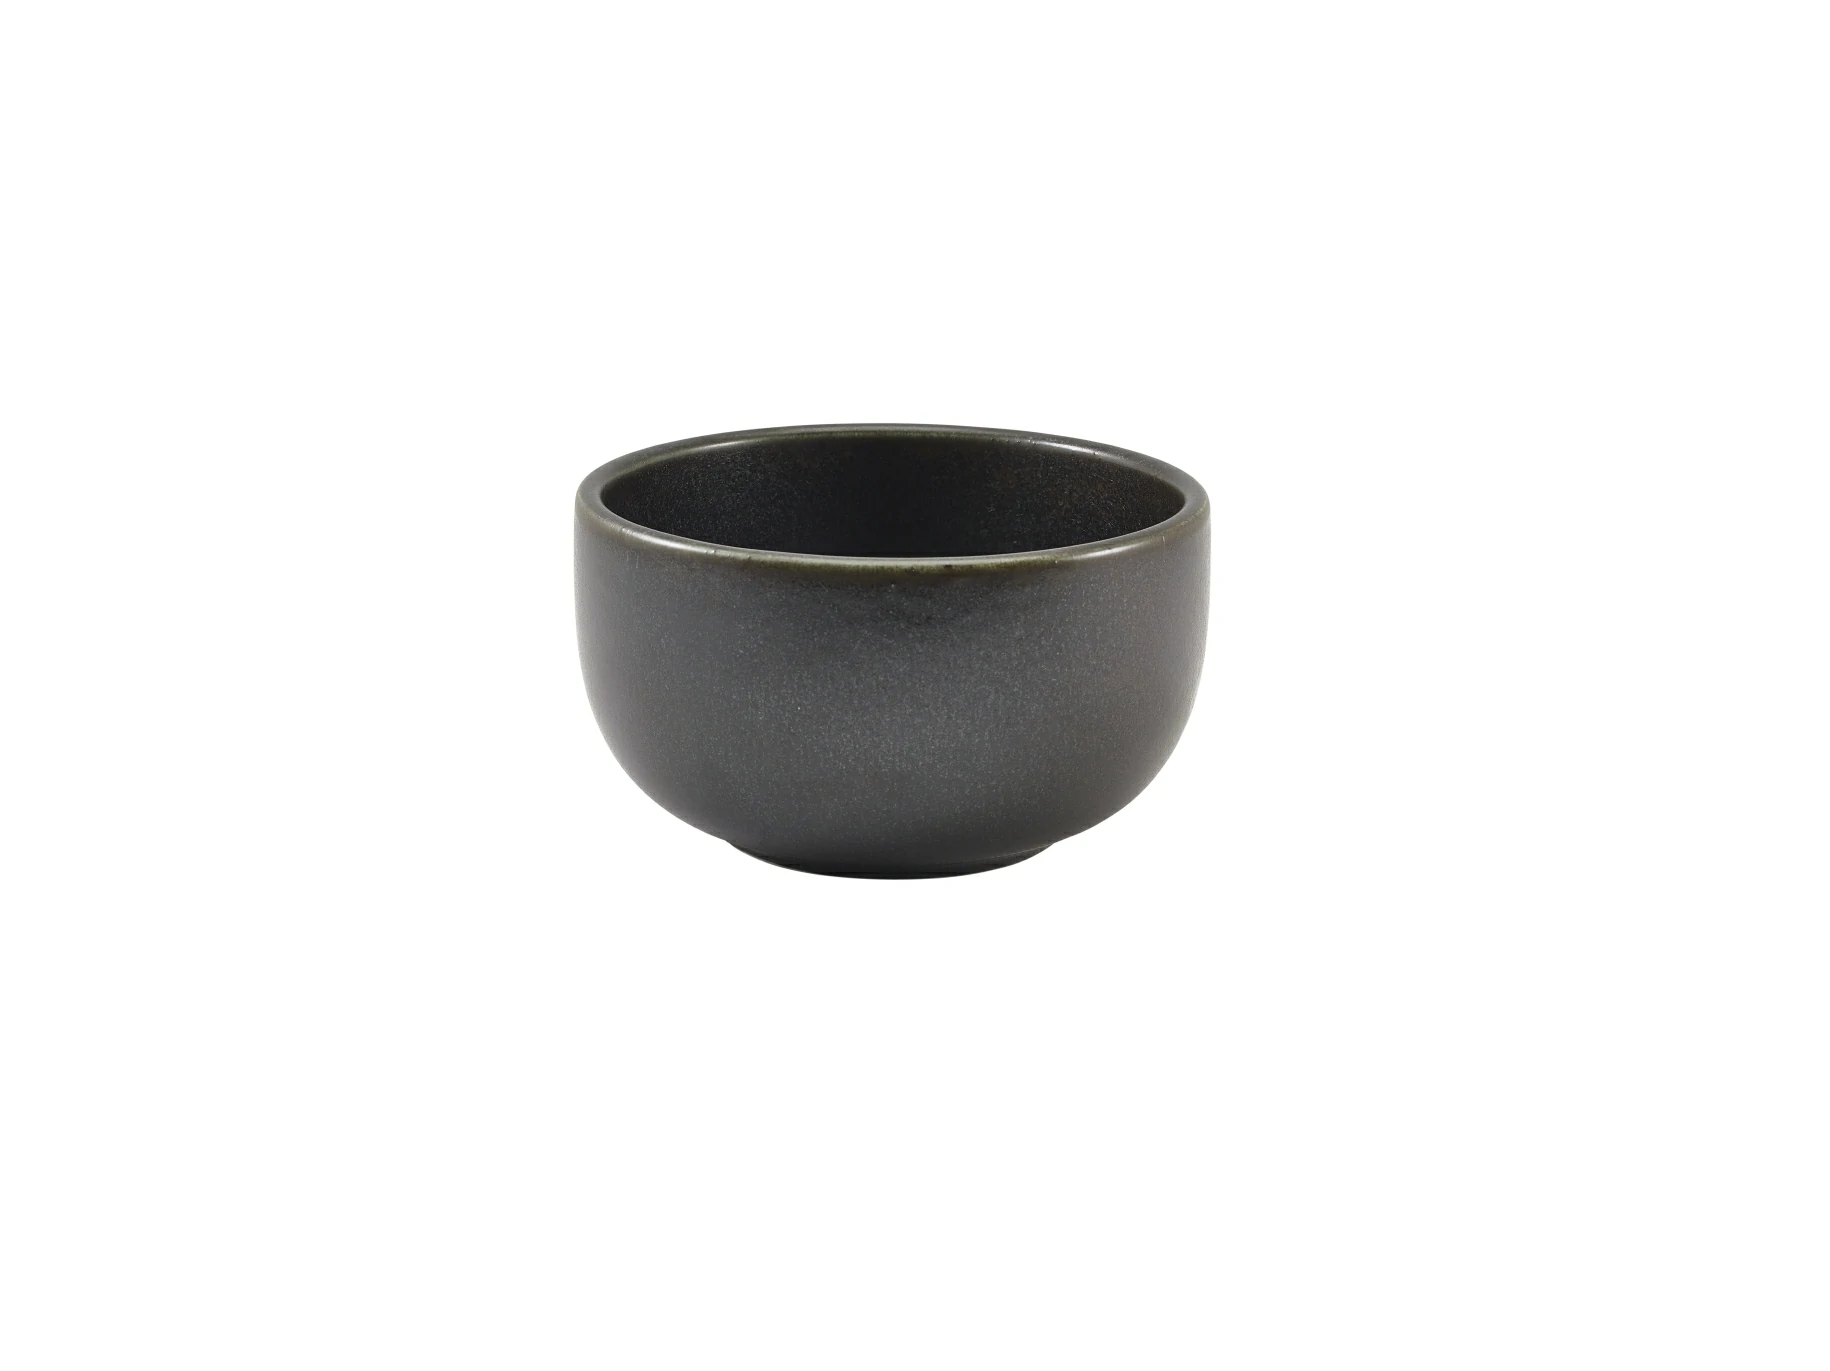 Terra Porcelain Black Round Bowl 12.5cm